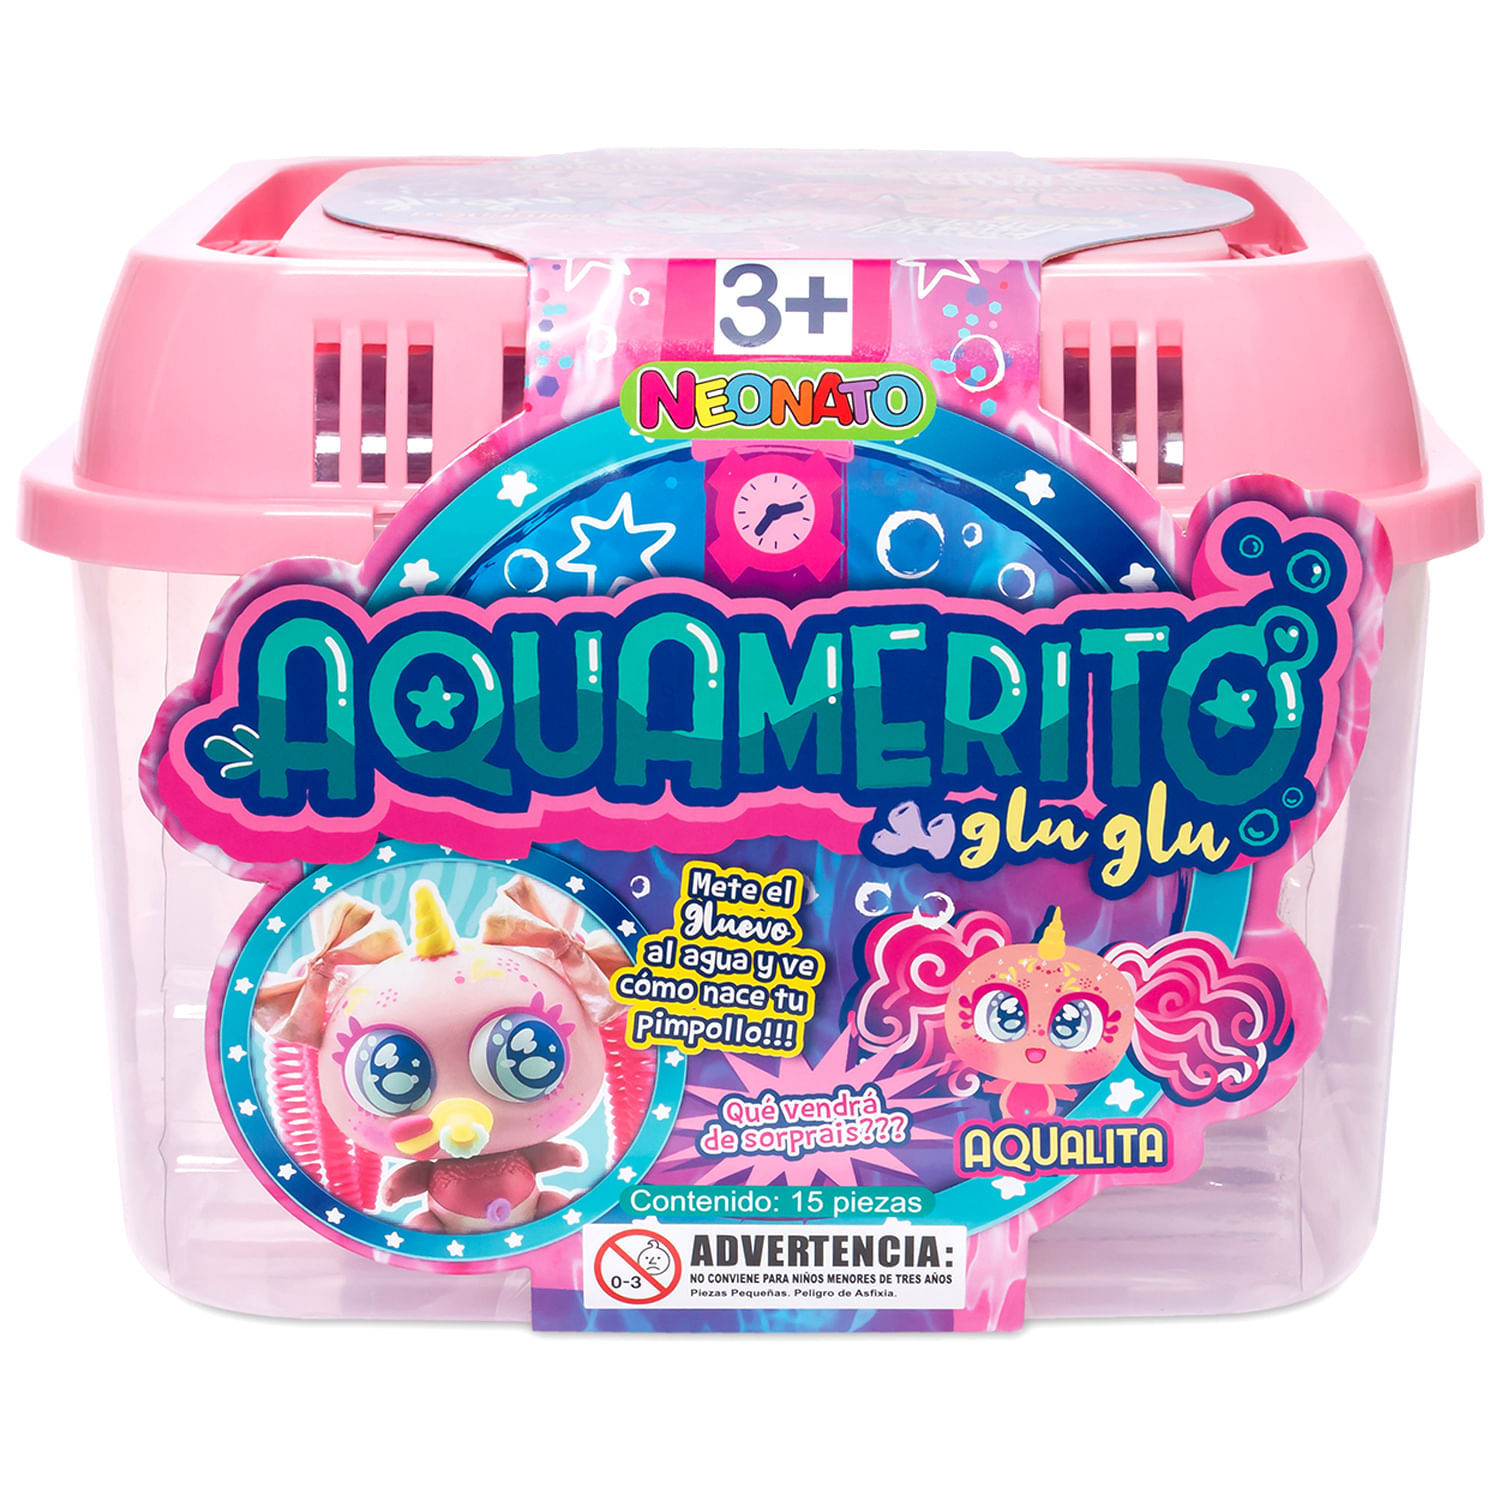 Muñeco Aquamerito Aqualita Rosa | Neonatos Distroller